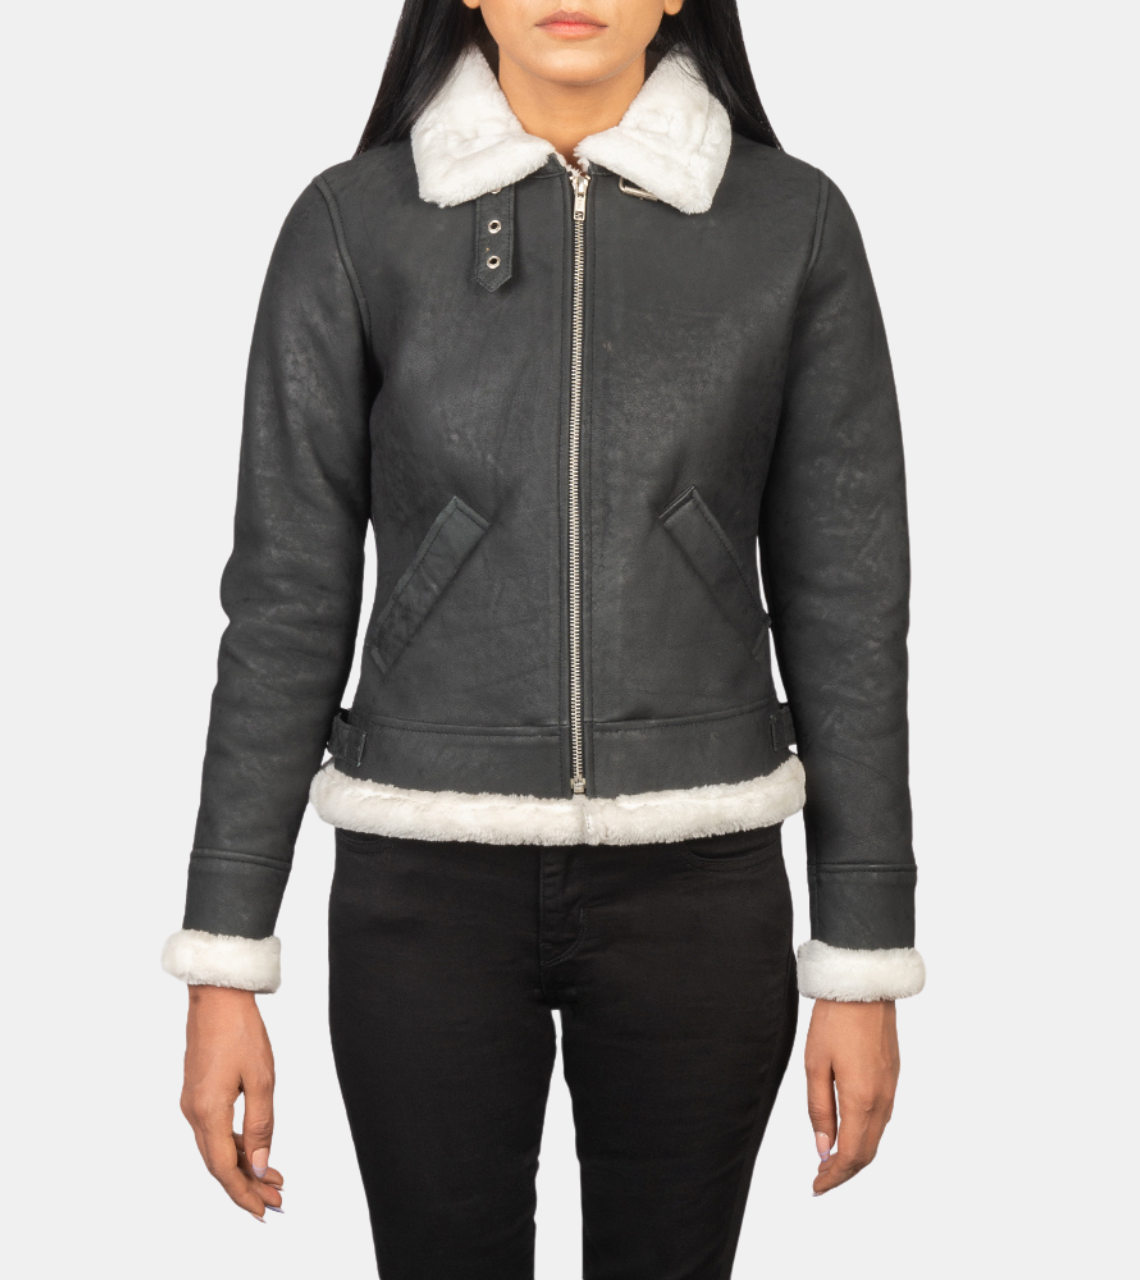 Maisiel Women's Grey Bomber Shearling Leather Jacket